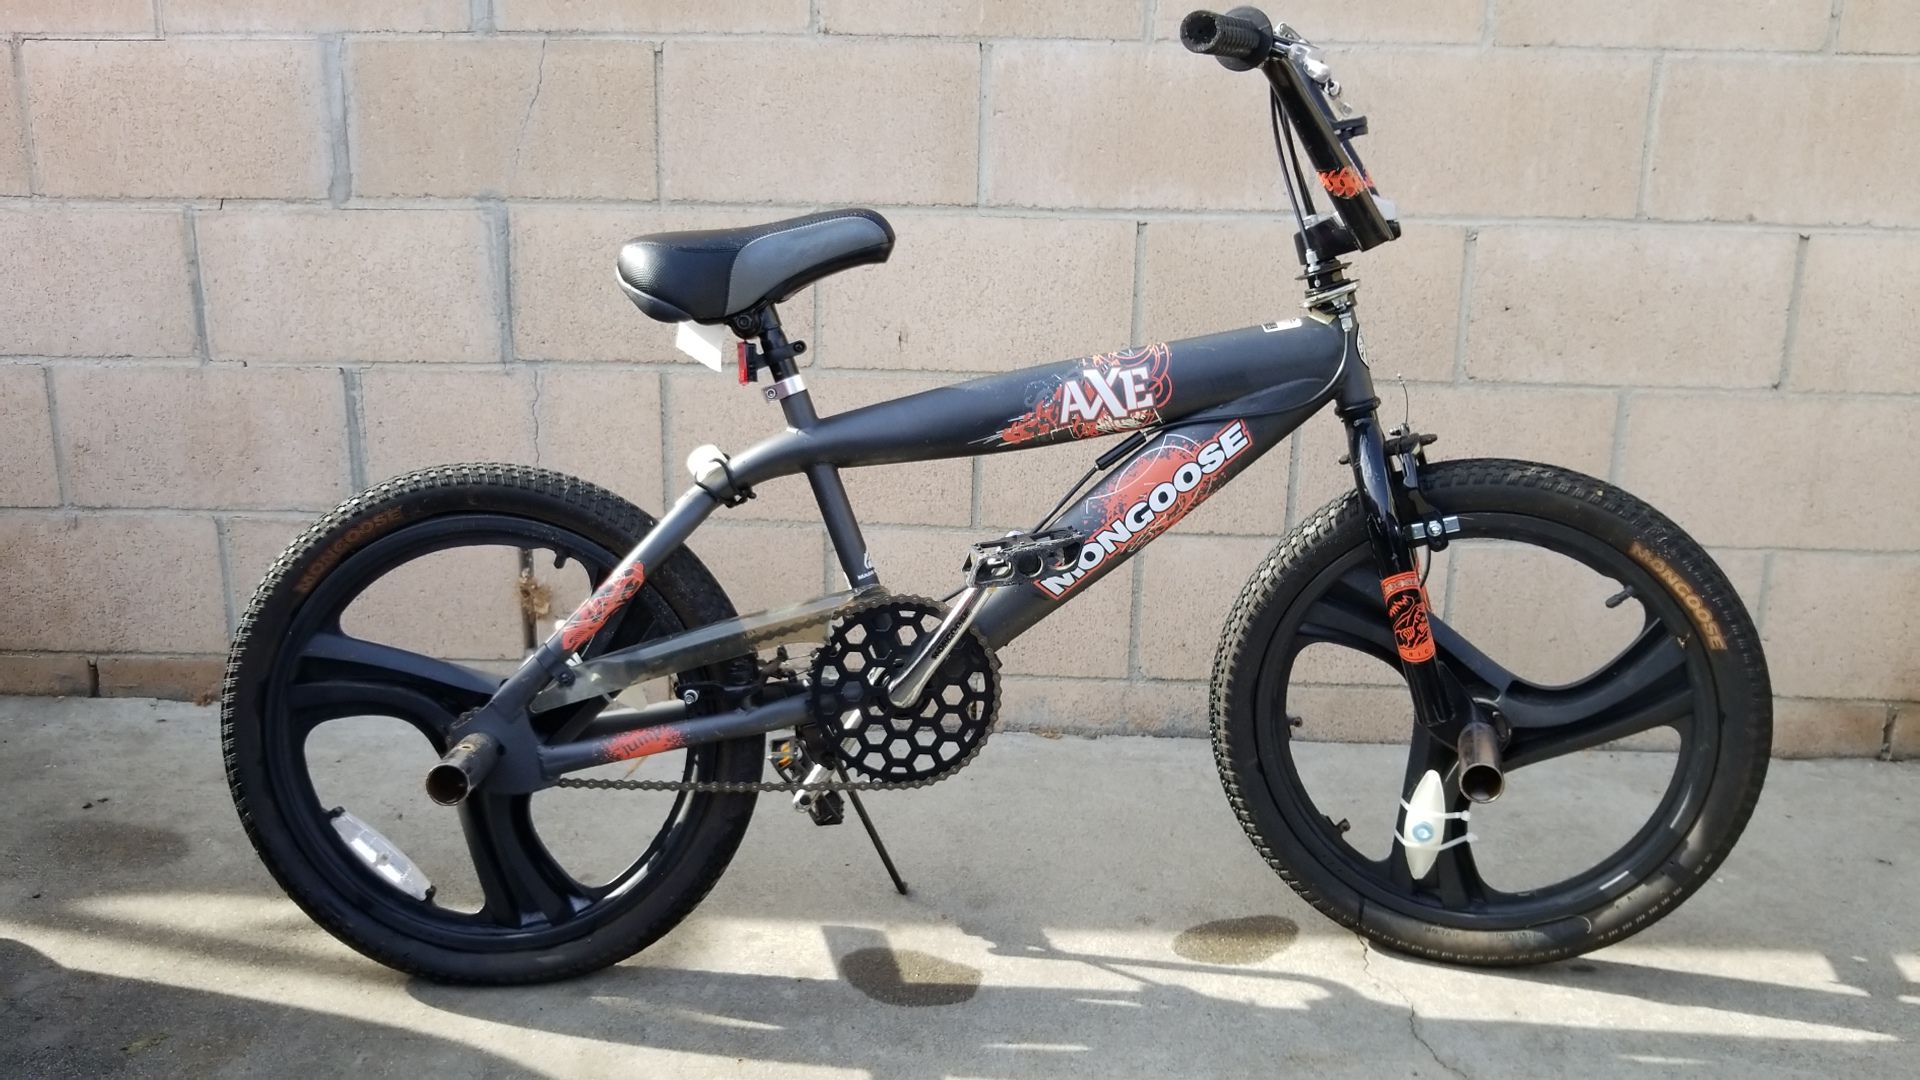 20" Mongoose Axe freestyle BMX bike